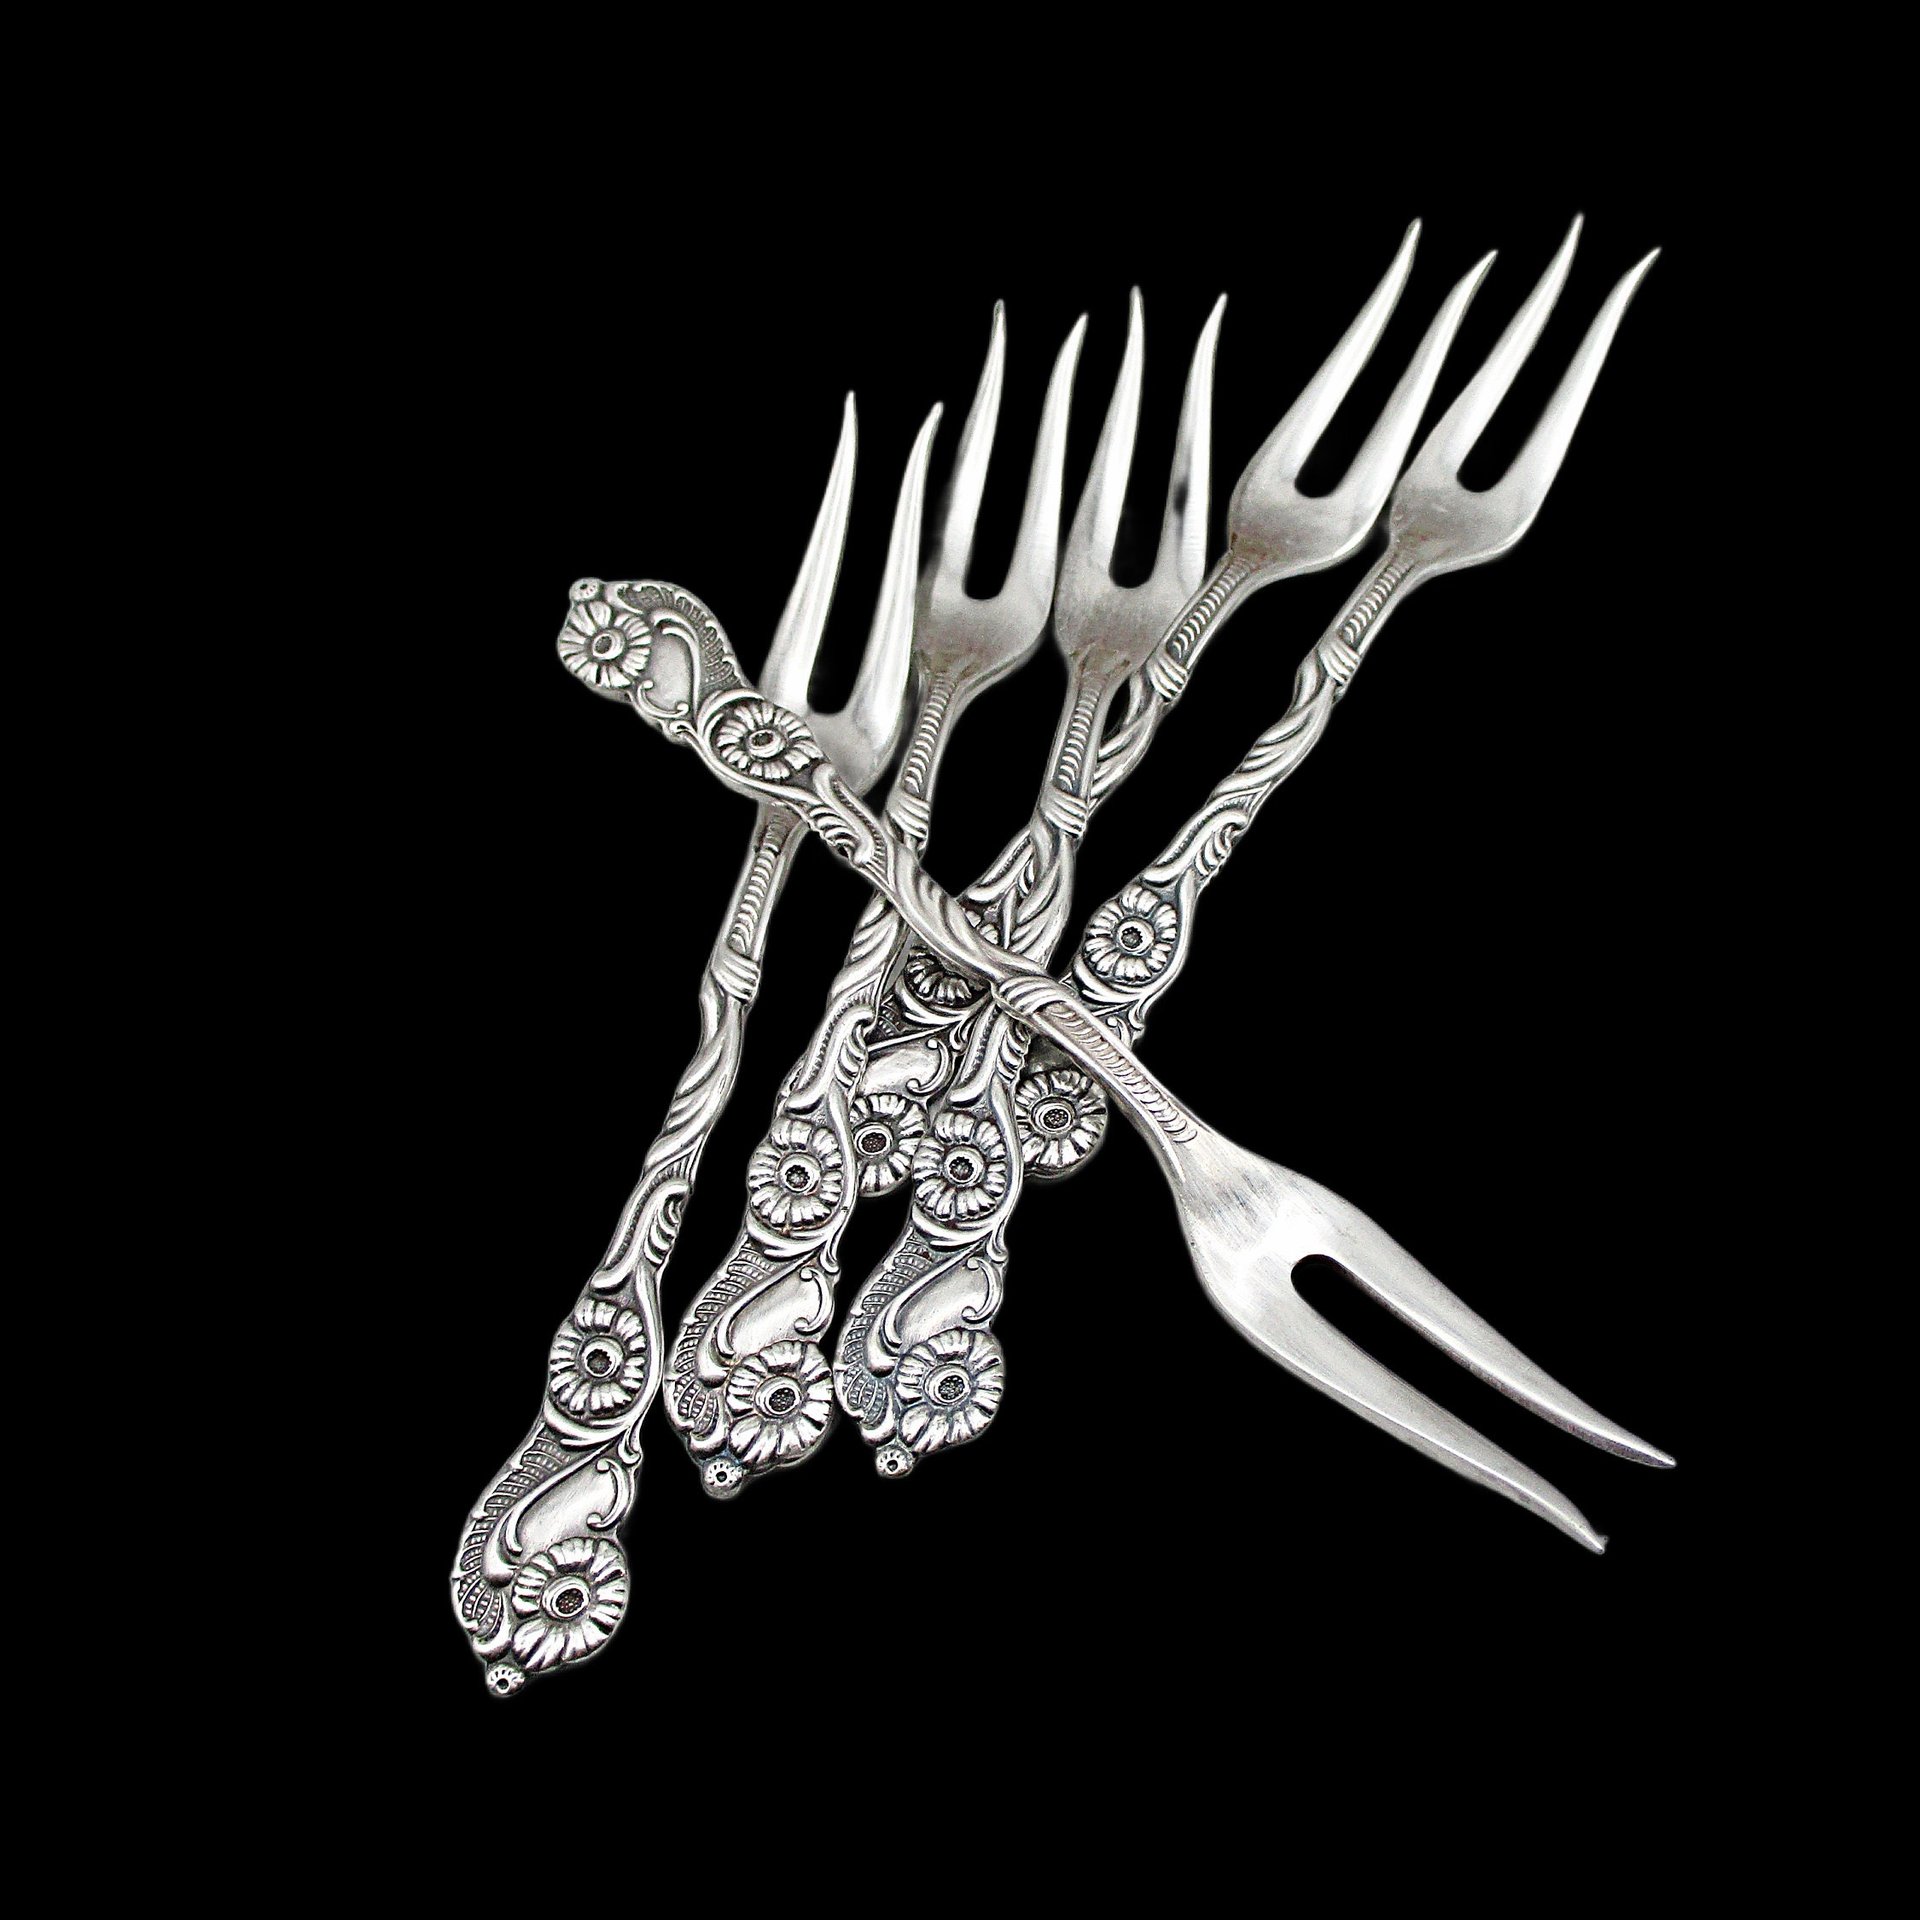 Set of 6, Small Forks by Nilsjohan for Seafood, Snail, Appetizer, Cocktail or Tidbits Forks, Made in Sweden, Ornate Handles, Original Box